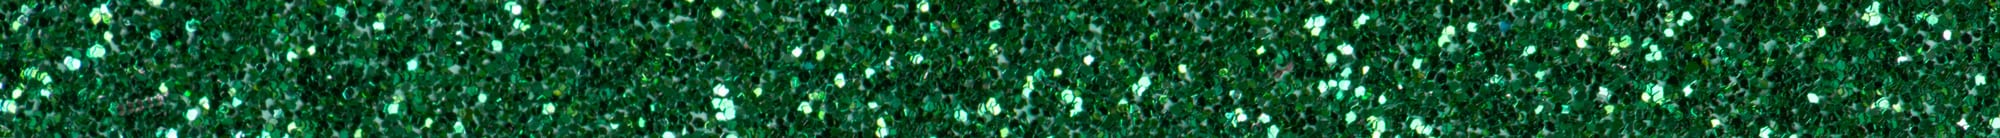 Green Glitter Background